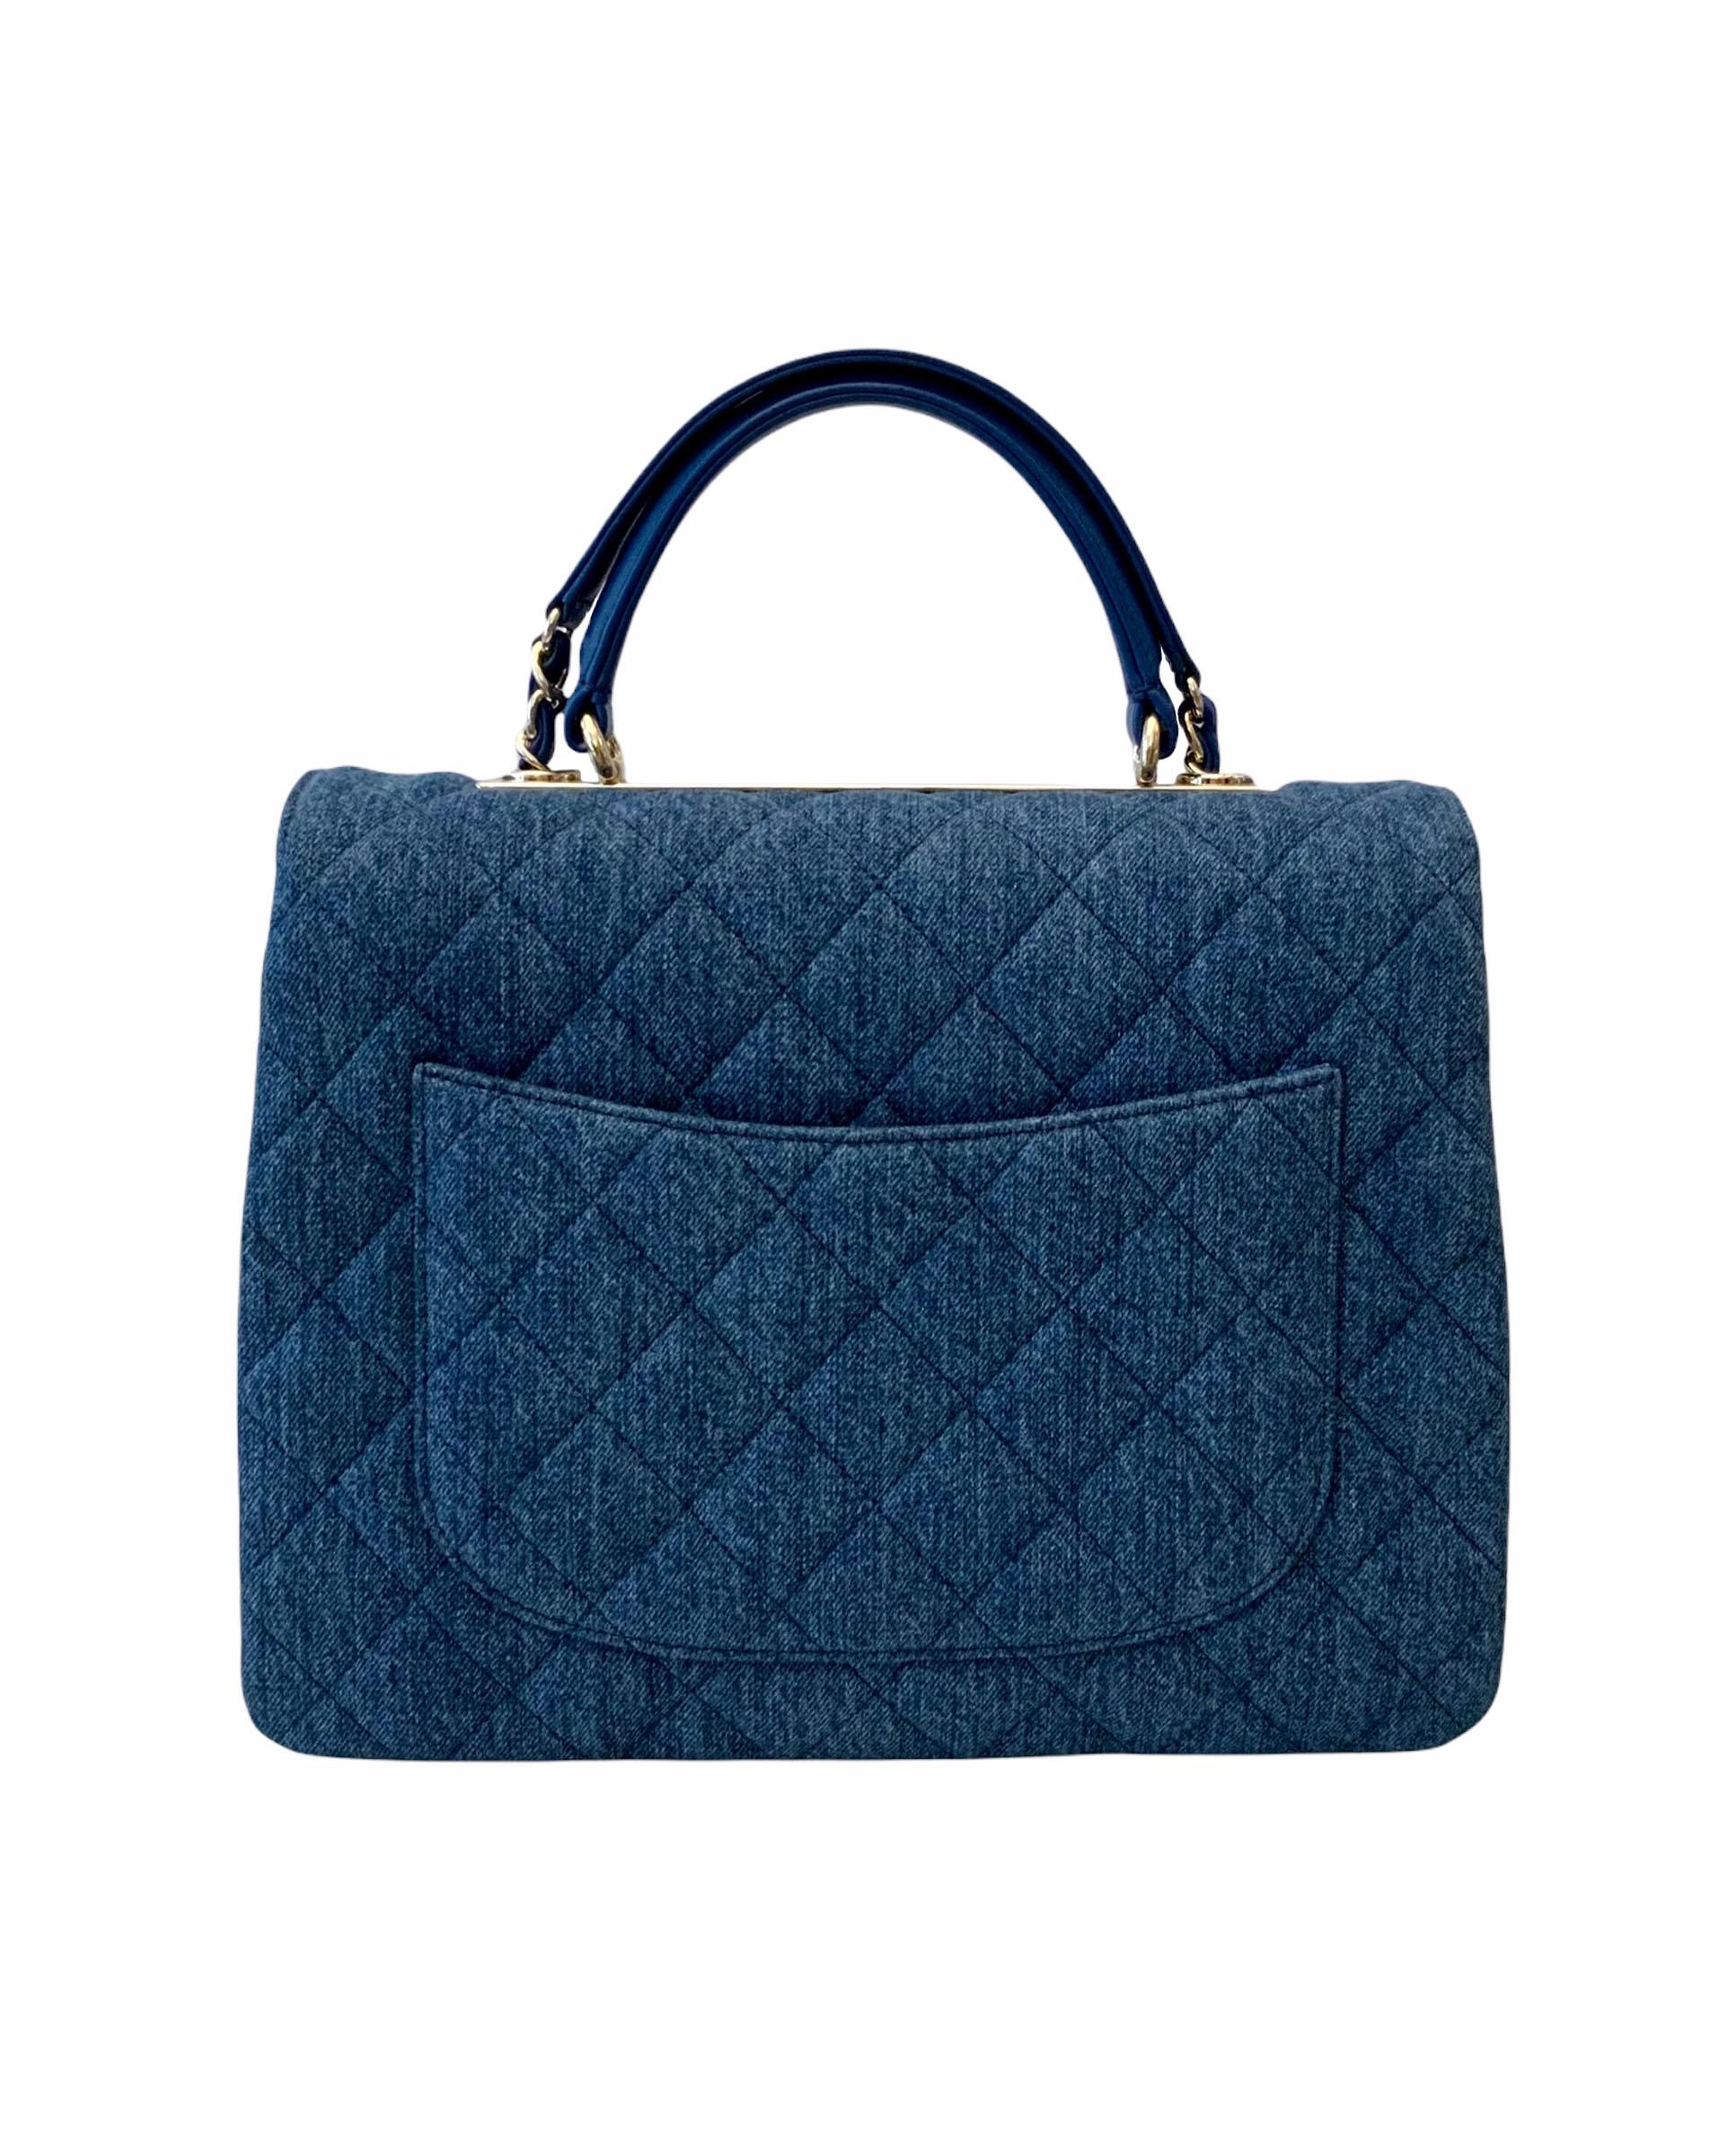 Women's or Men's Chanel Trendy CC Blue Denim Top Handle Bag